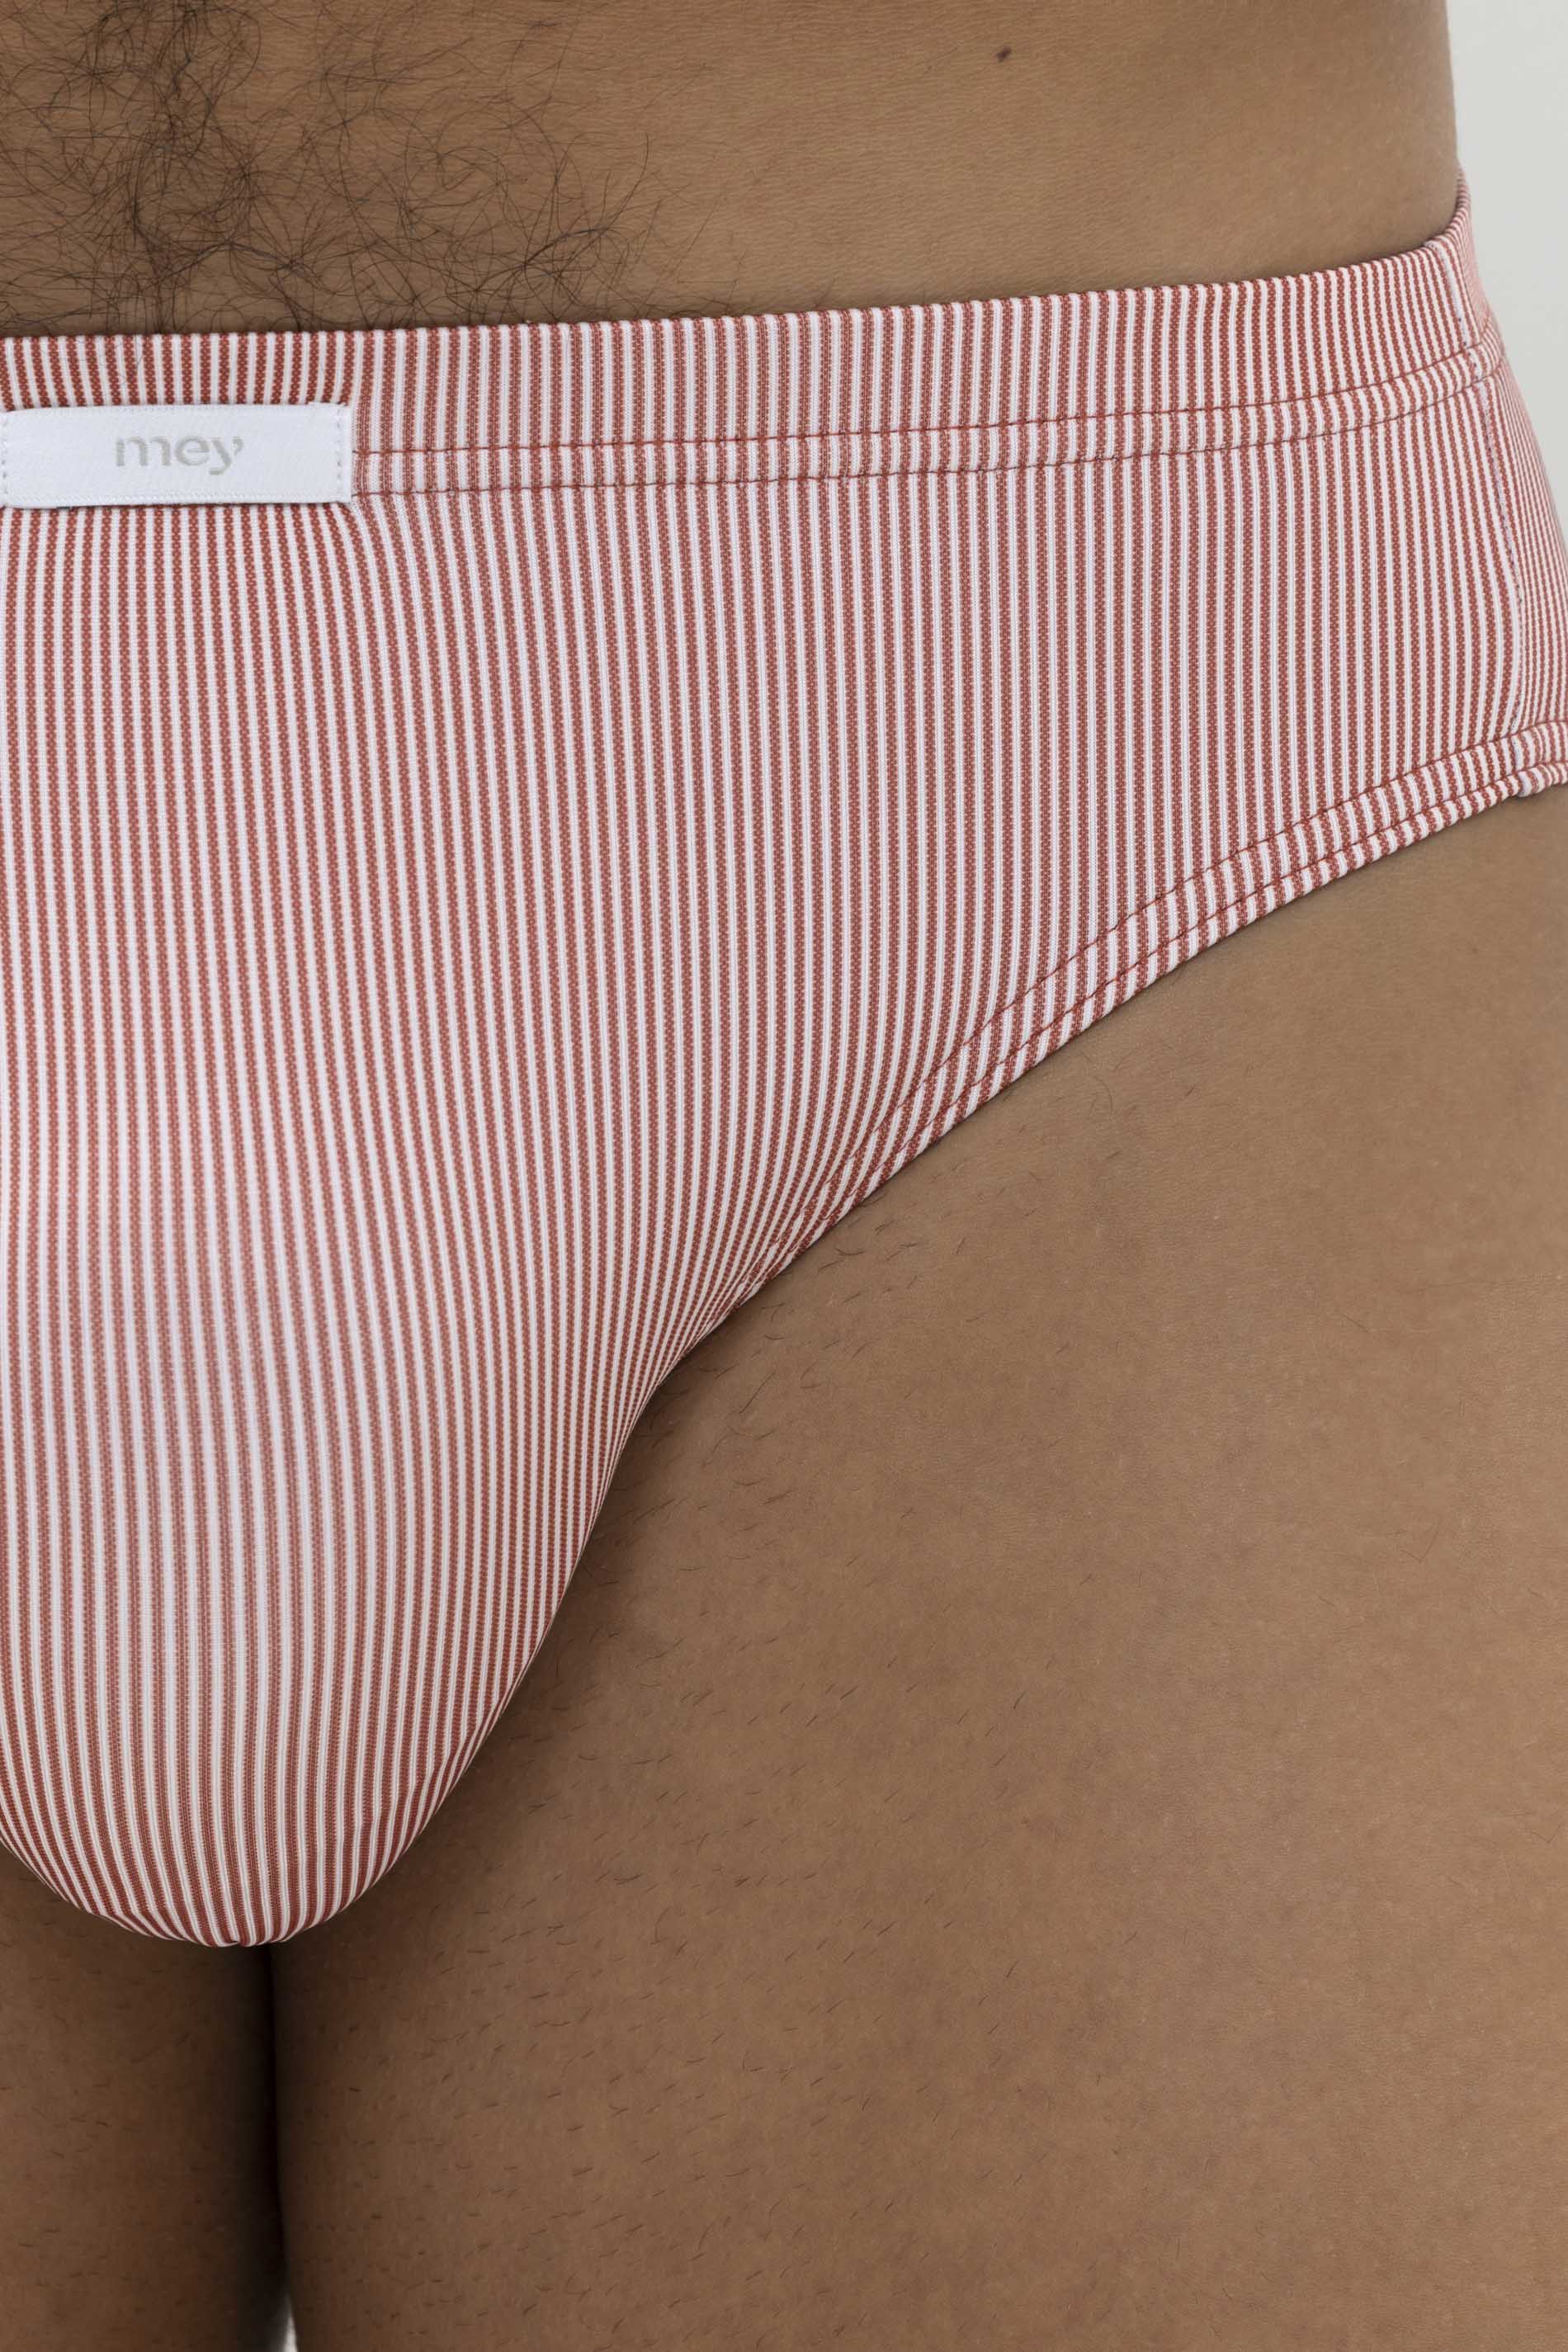 Jazz-pants Serie Needle Stripes Detailweergave 02 | mey®